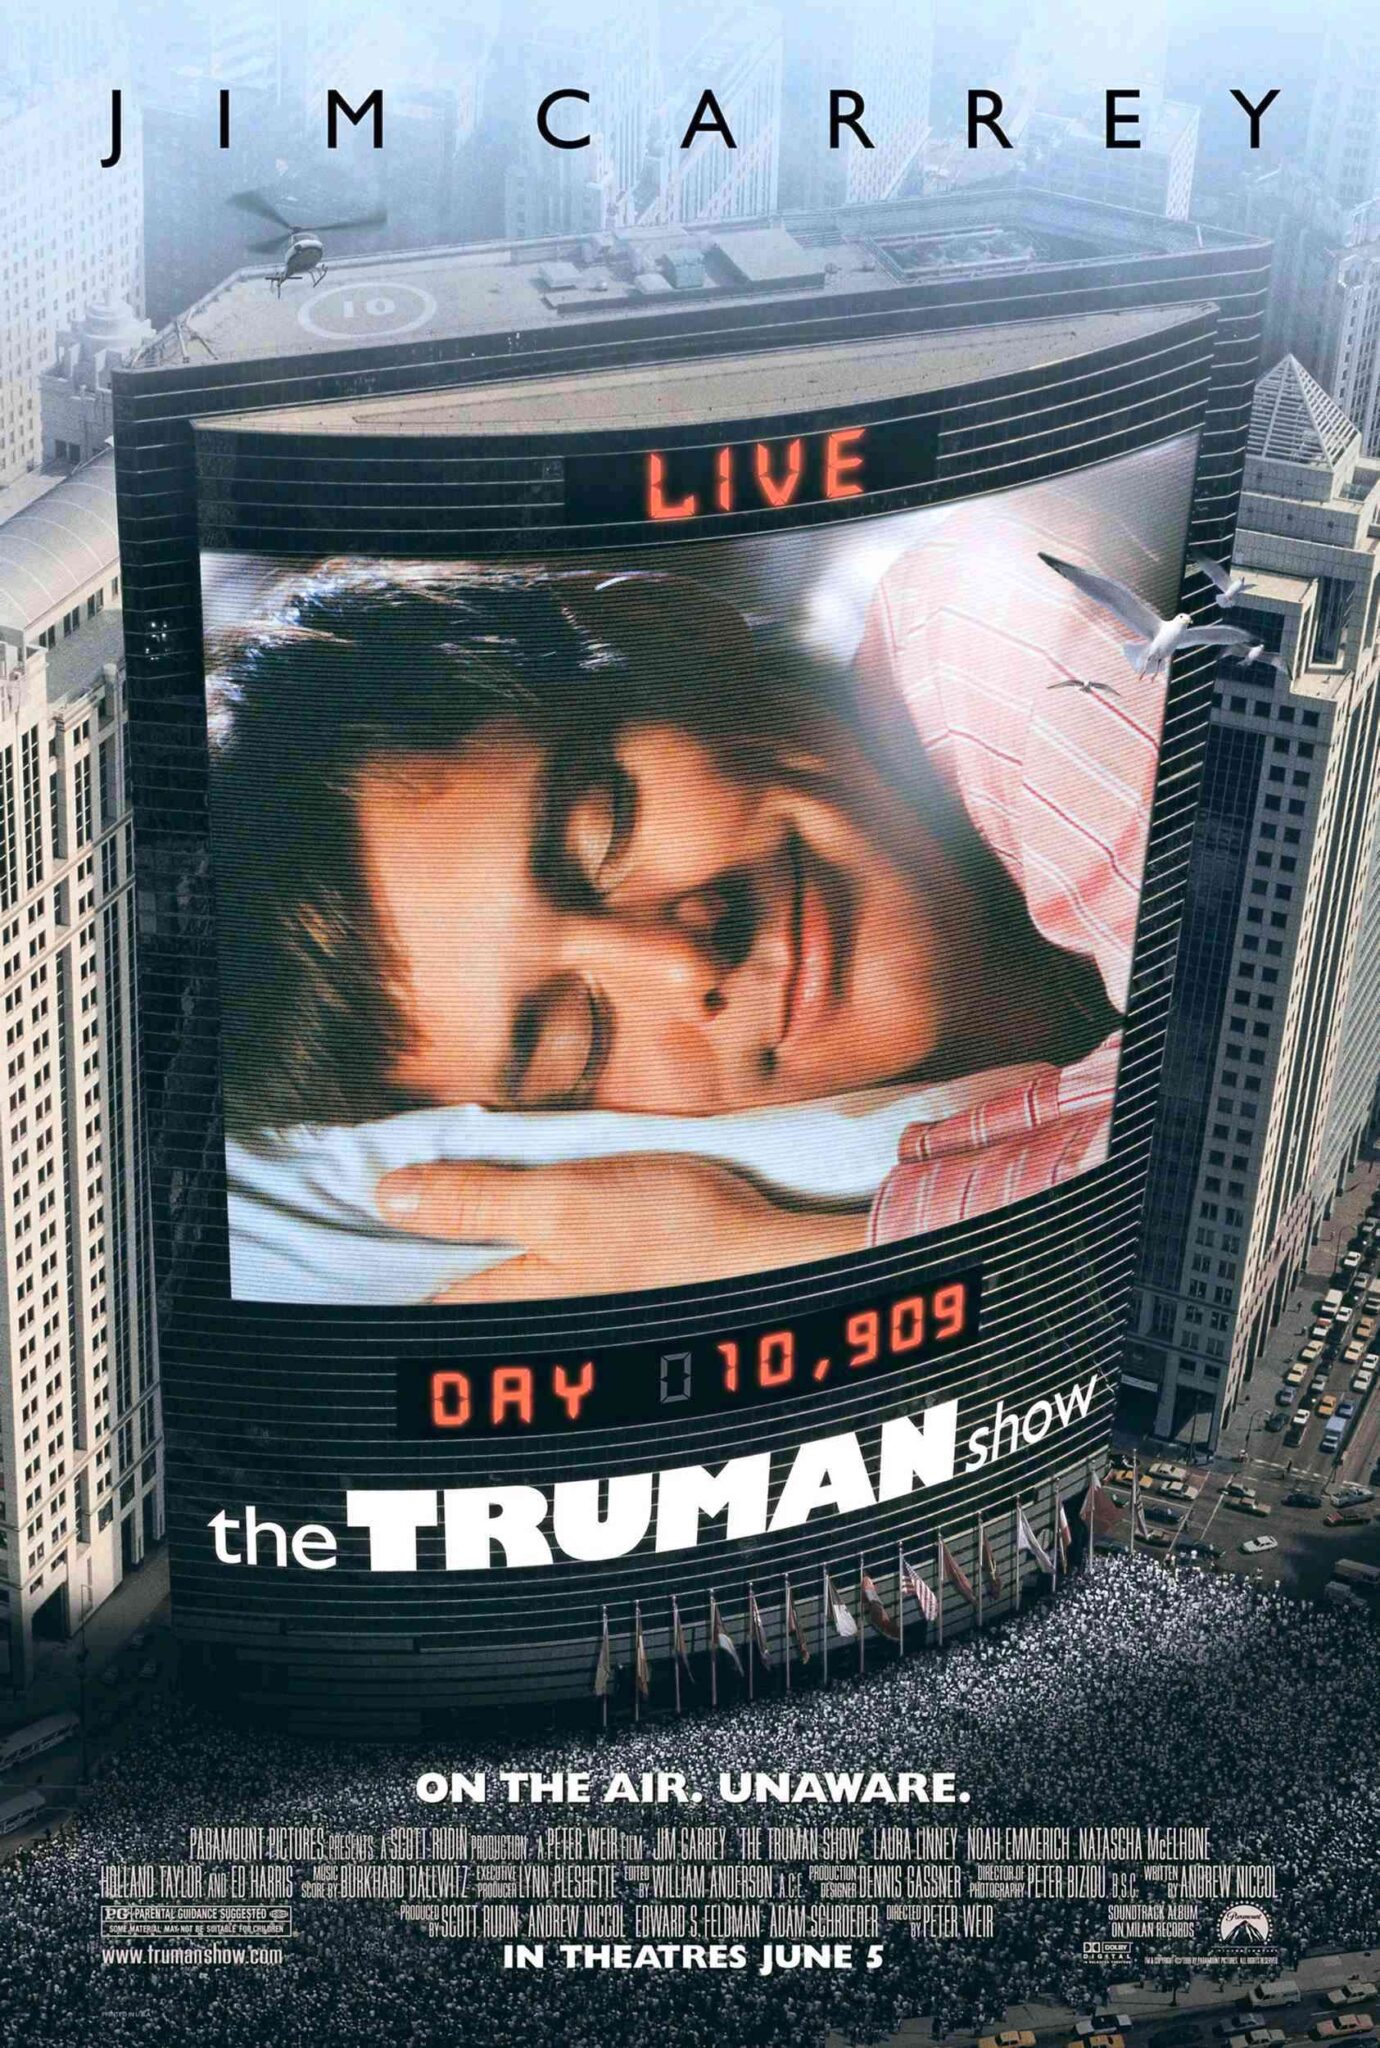 FULL MOVIE: The Truman Show (1998)